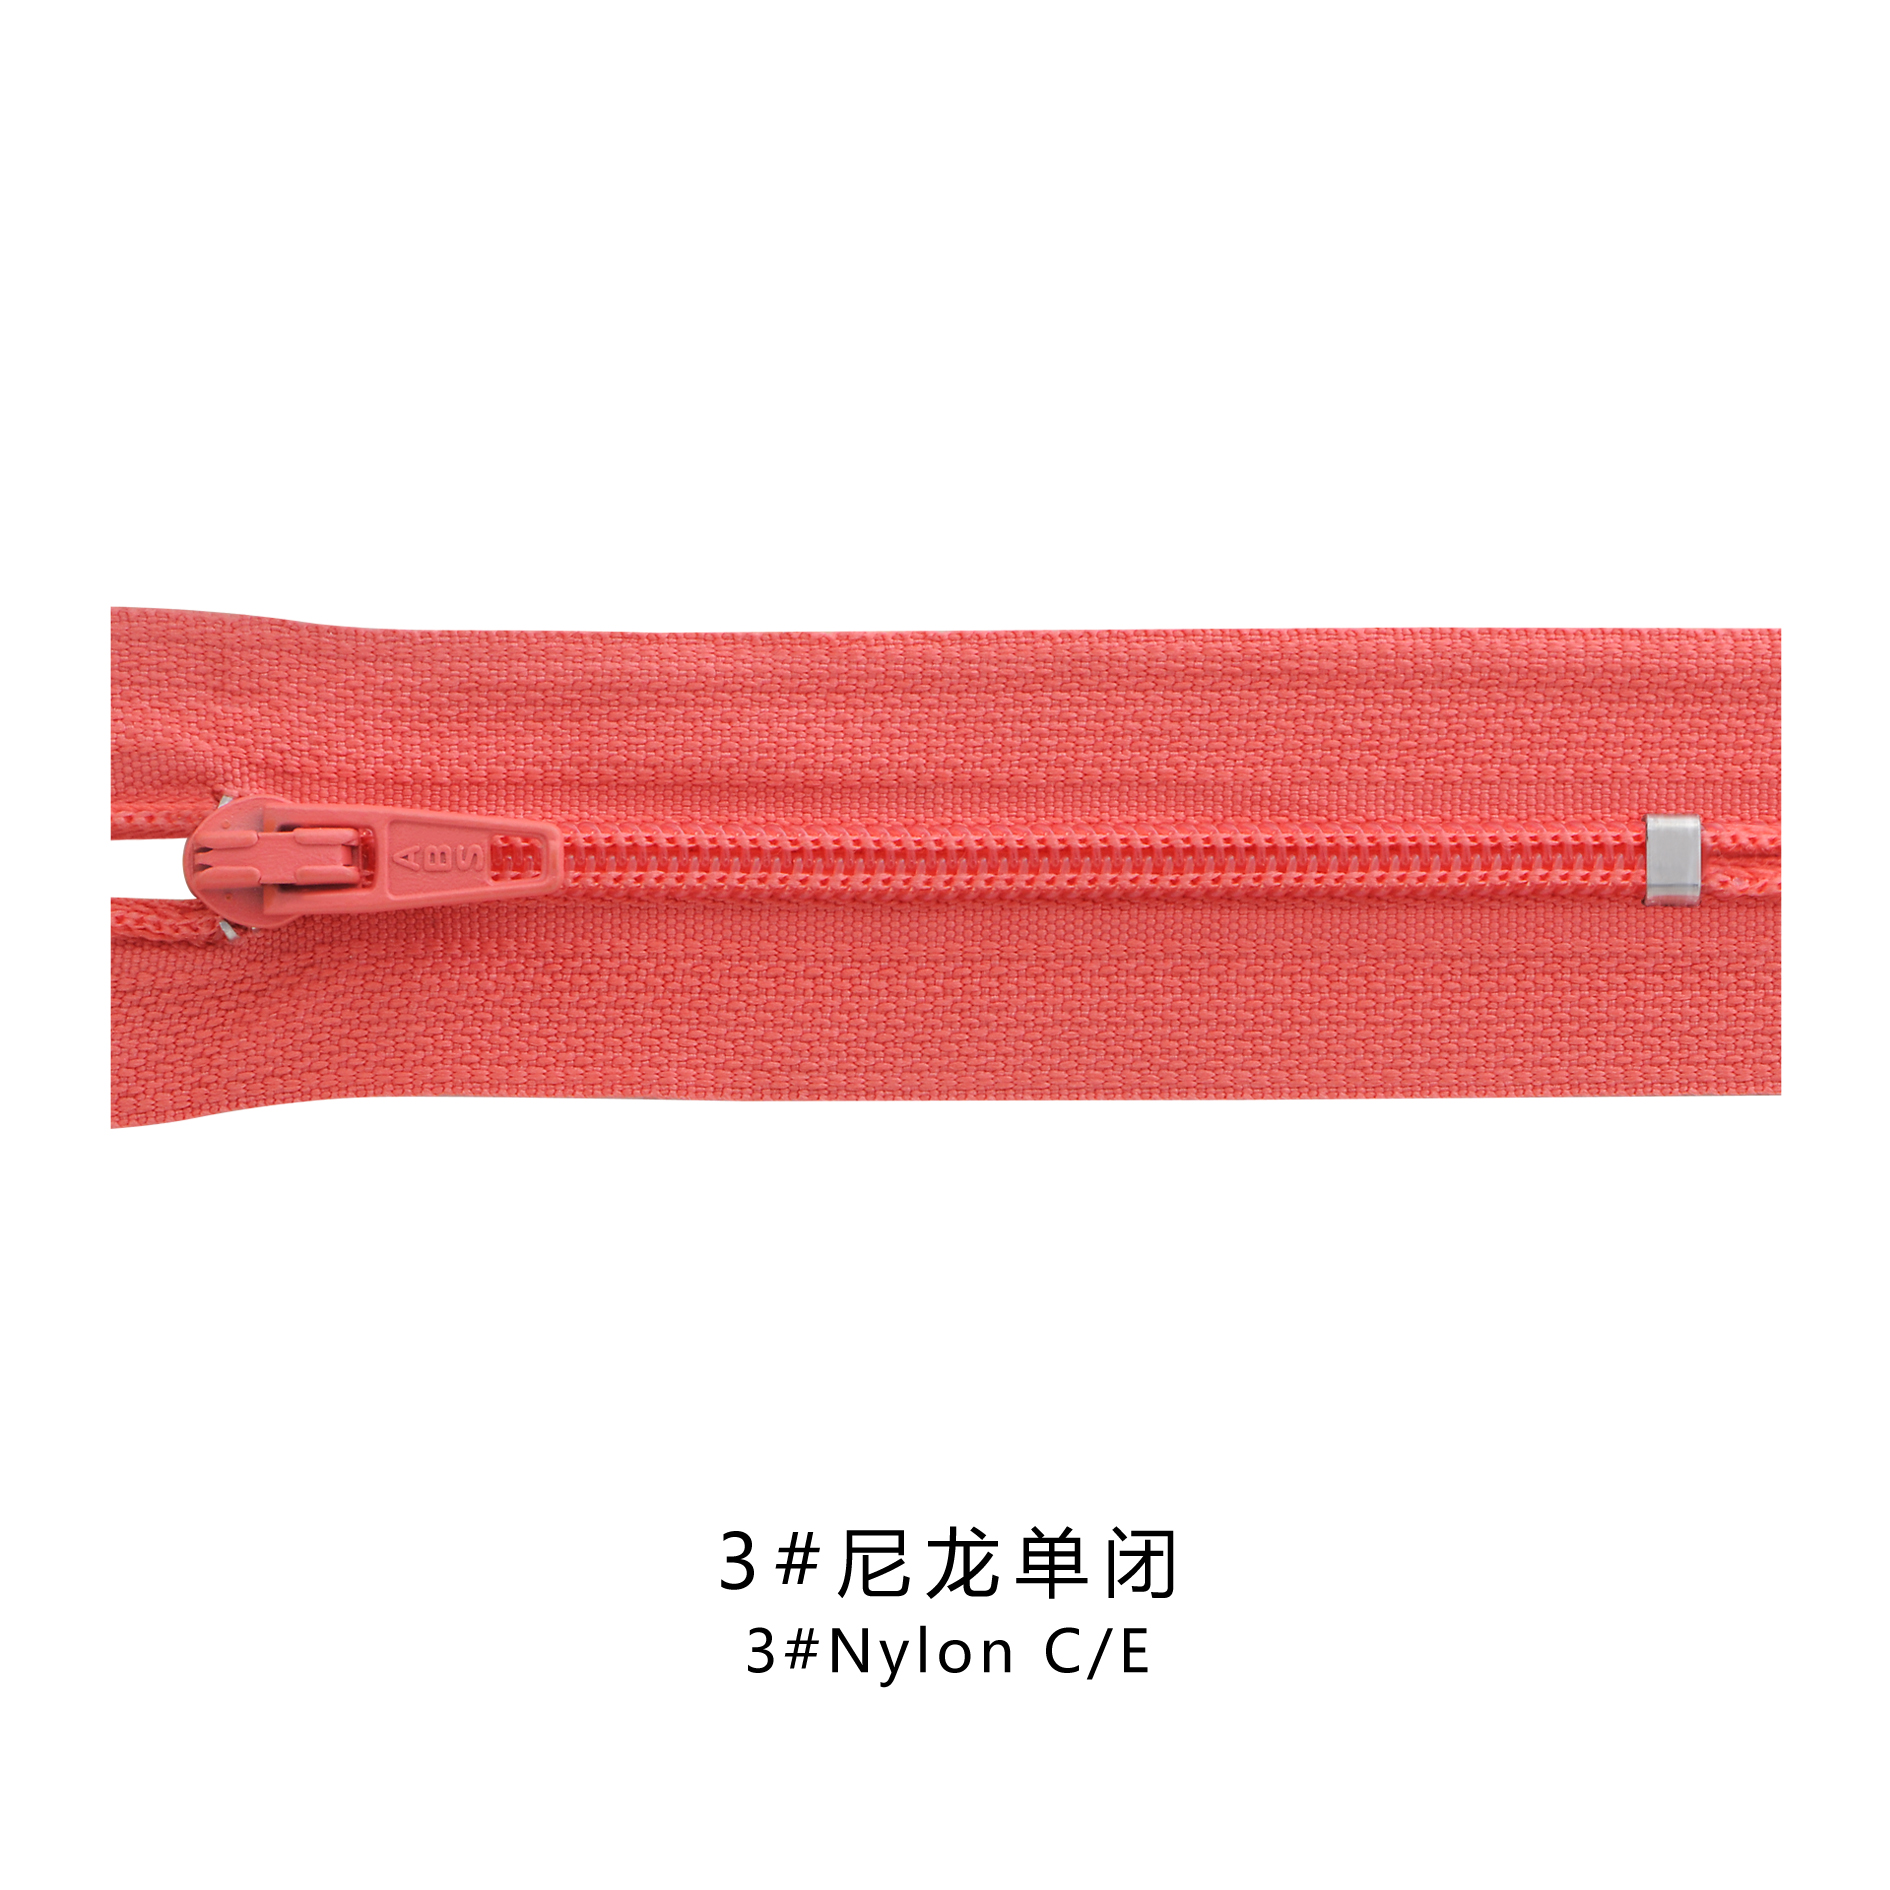 Custom Cfc Zipper 3# nylon close end zipper 